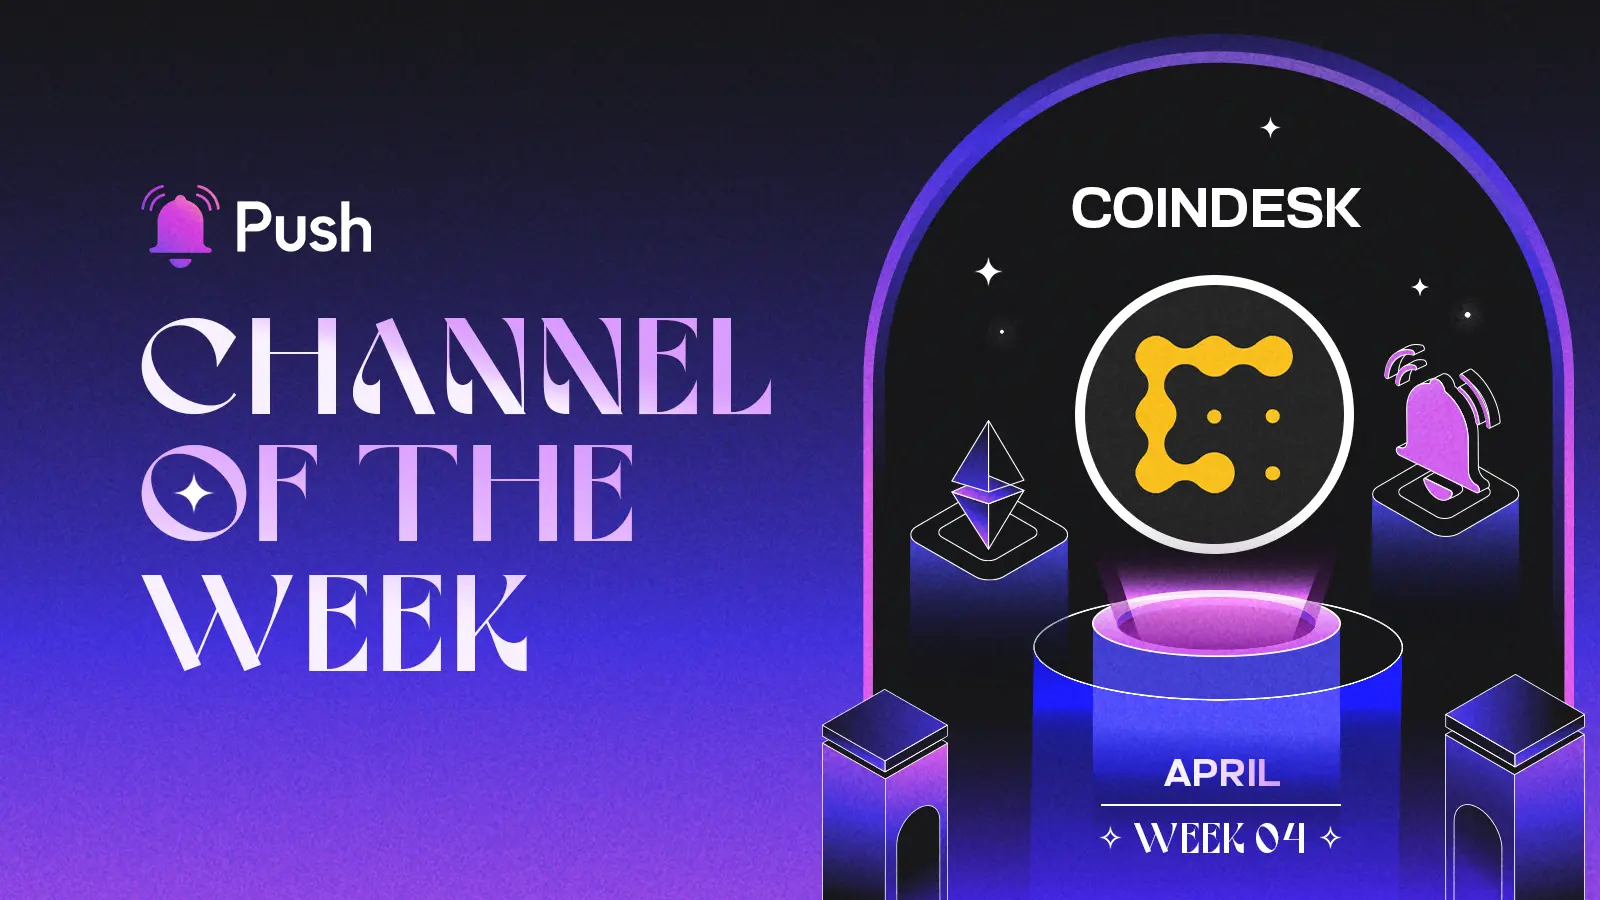 Banner celebrating Coindesk as April - week 4 channel of week